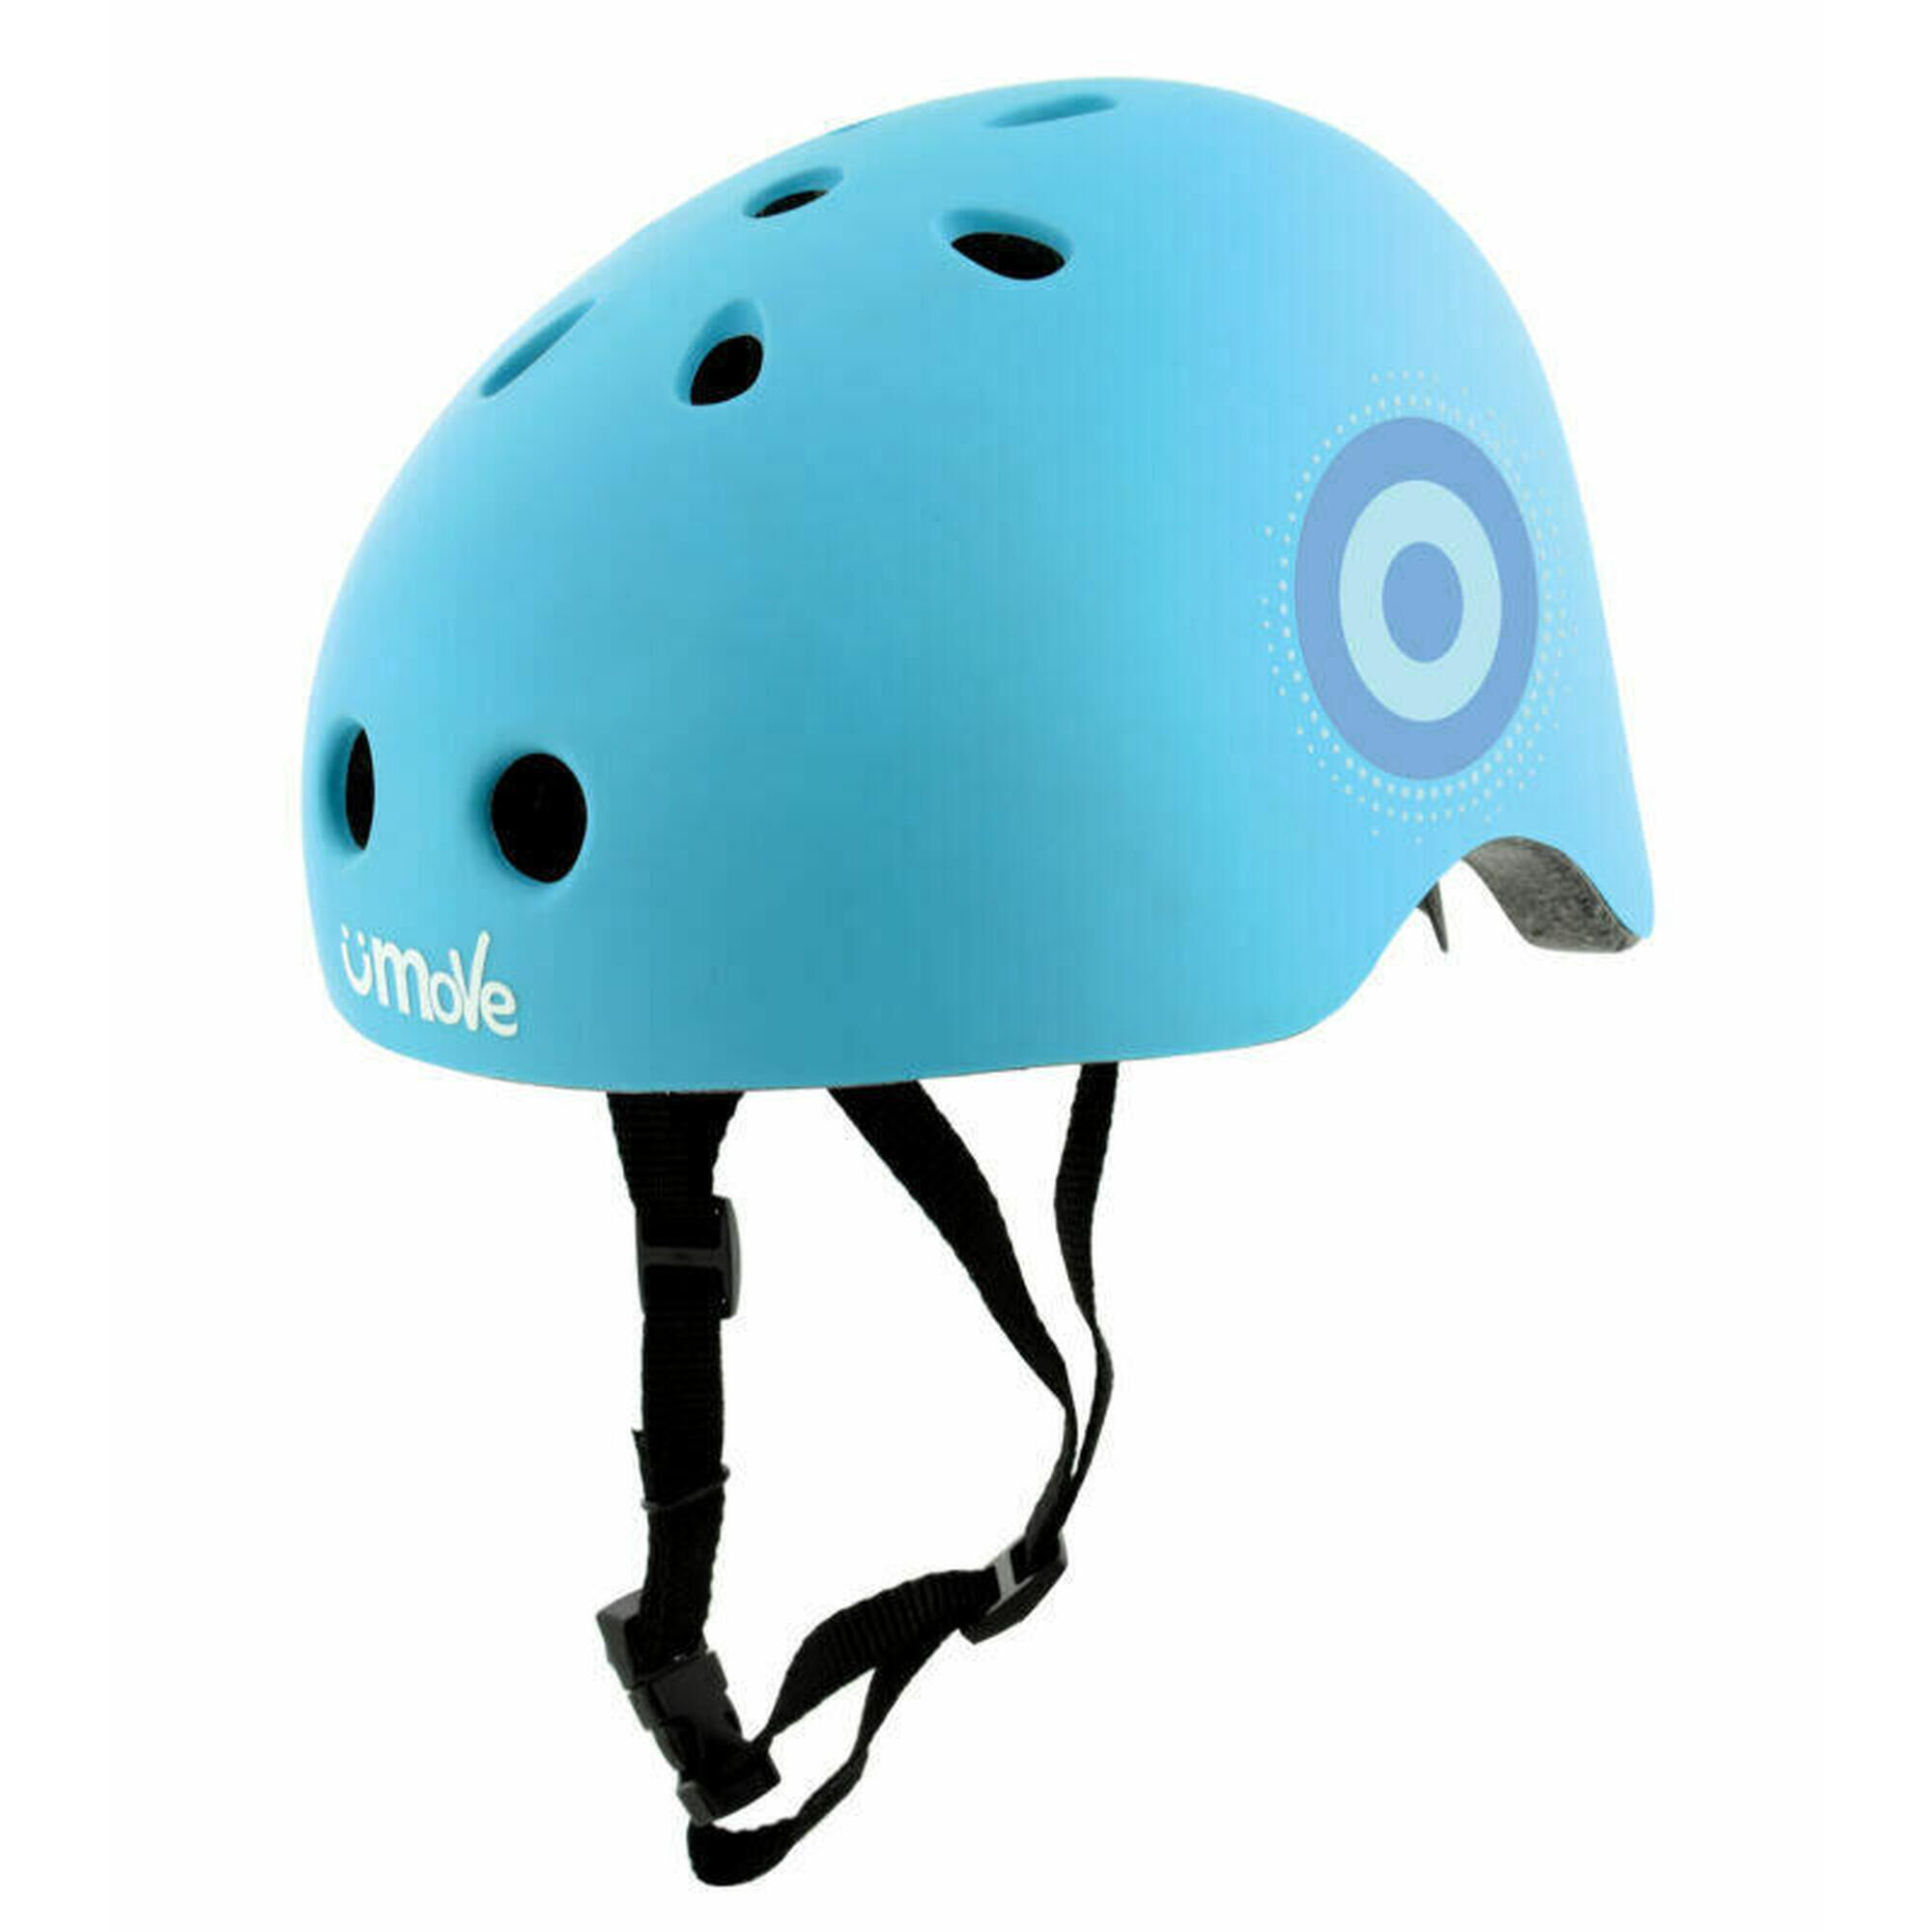 U-MOVE Neon Ramp Kids Bike Safety Helmet, 48-52cm